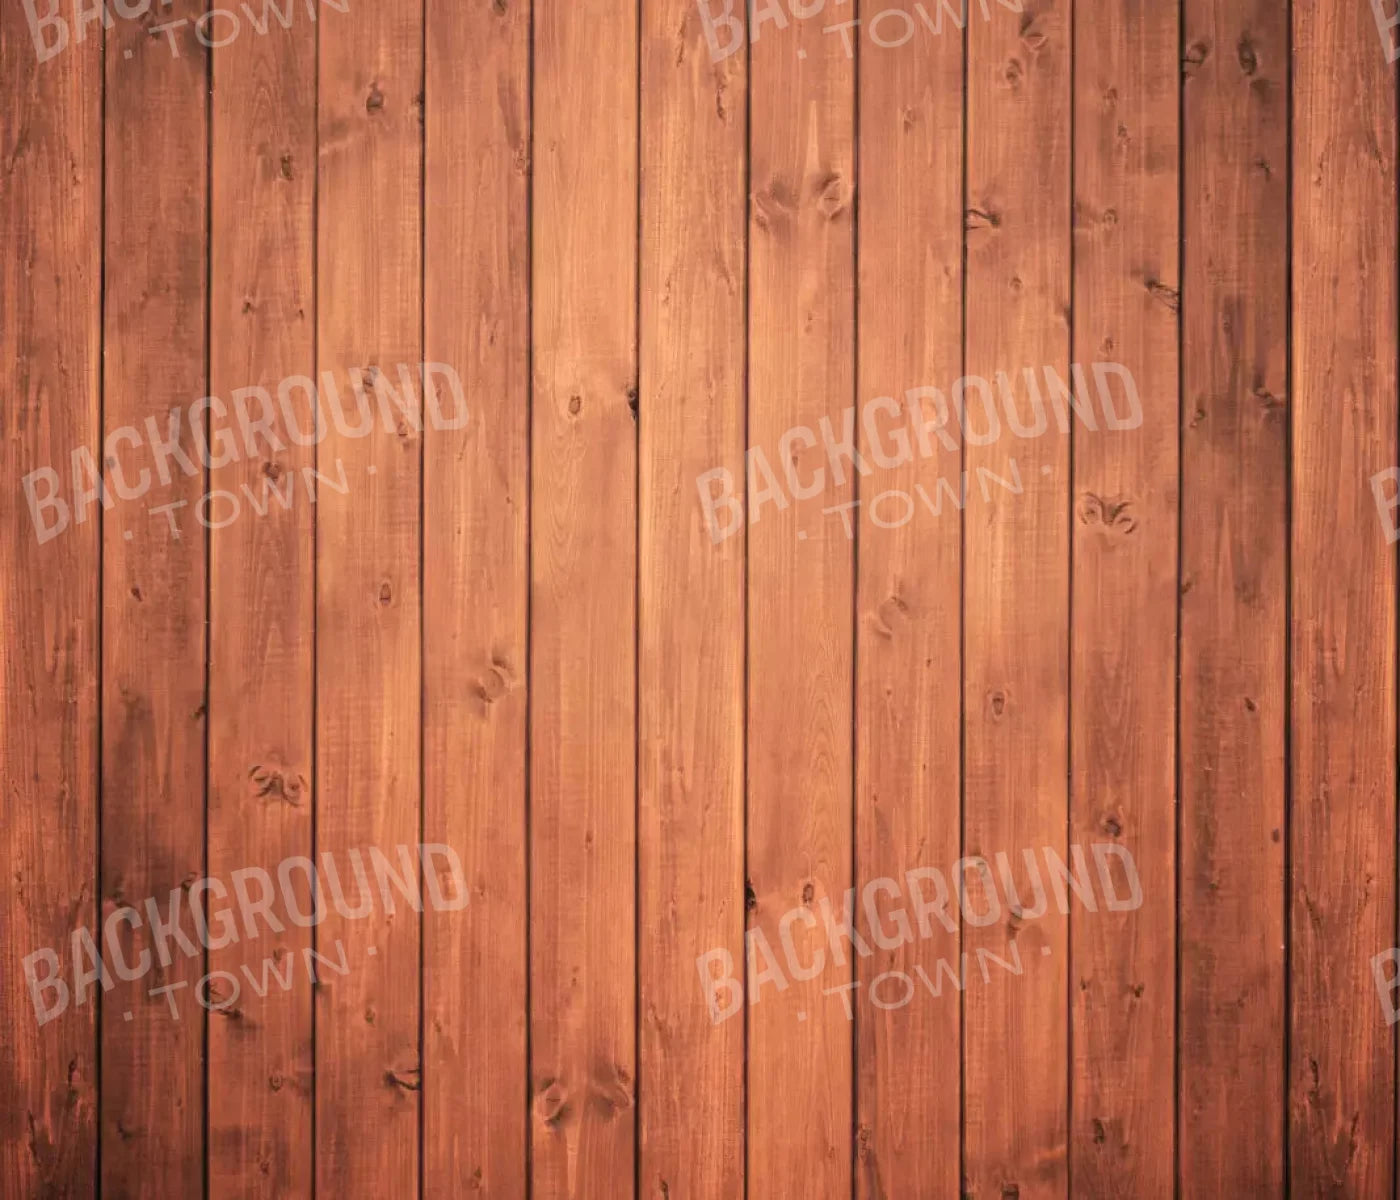 Warm Wooden Wall 12X10 Ultracloth ( 144 X 120 Inch ) Backdrop